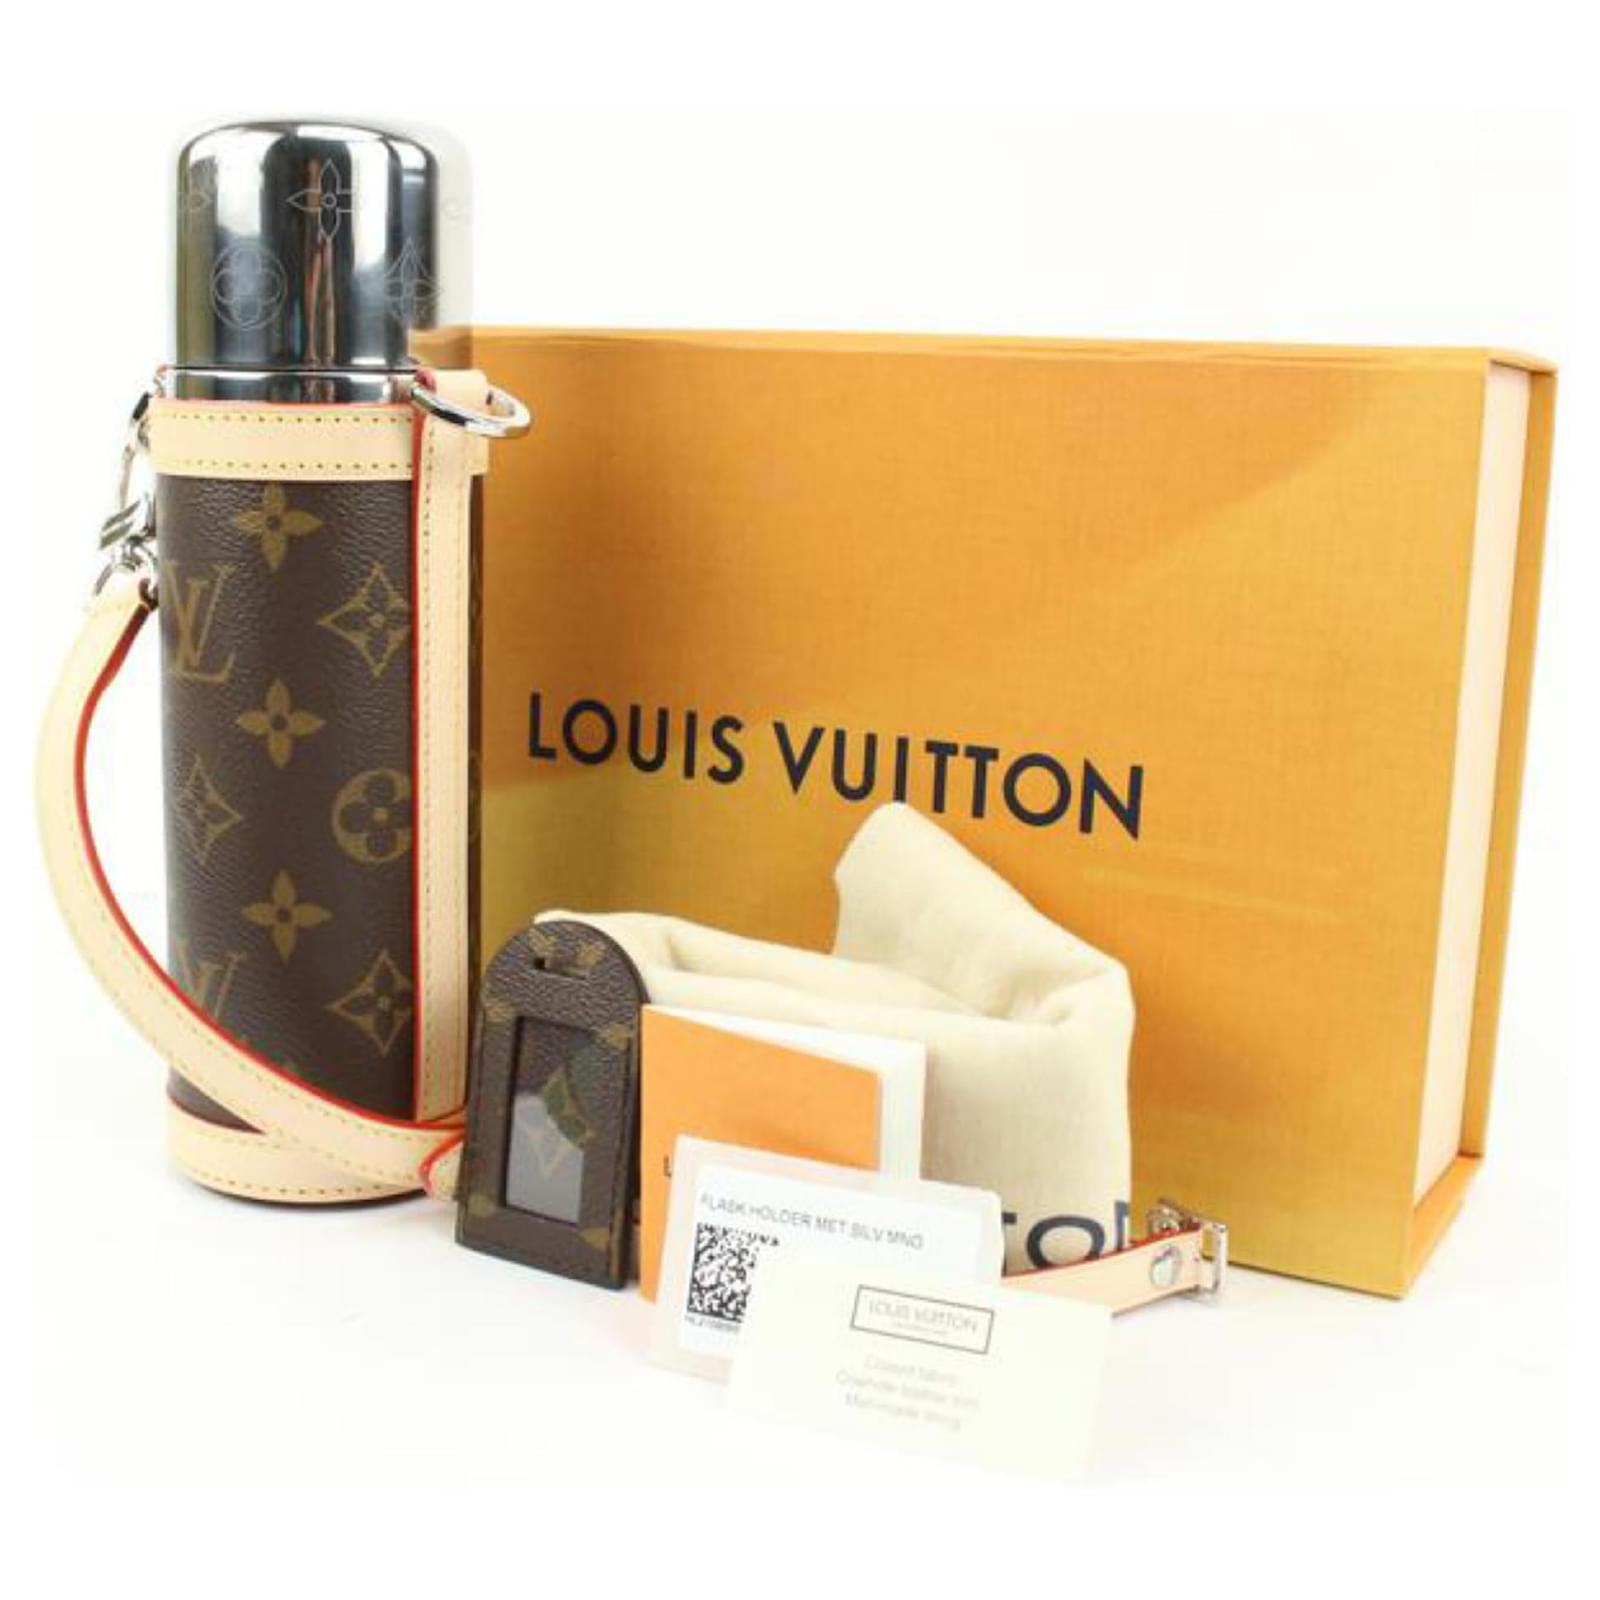 LOUIS VUITTON® Thermos  Flask holder, Monogram, Louis vuitton